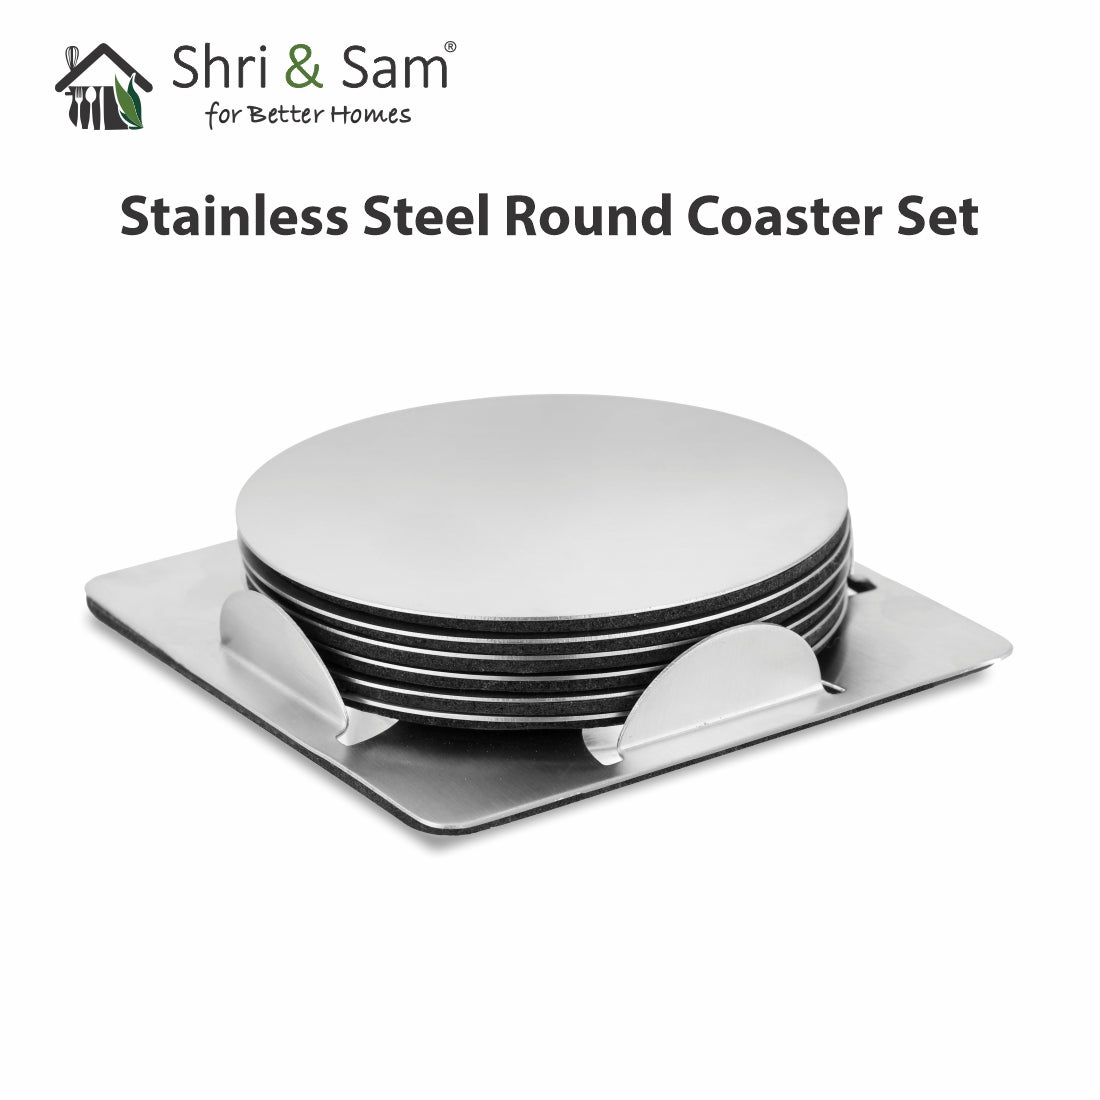 Stainless Steel Round Coaster Set